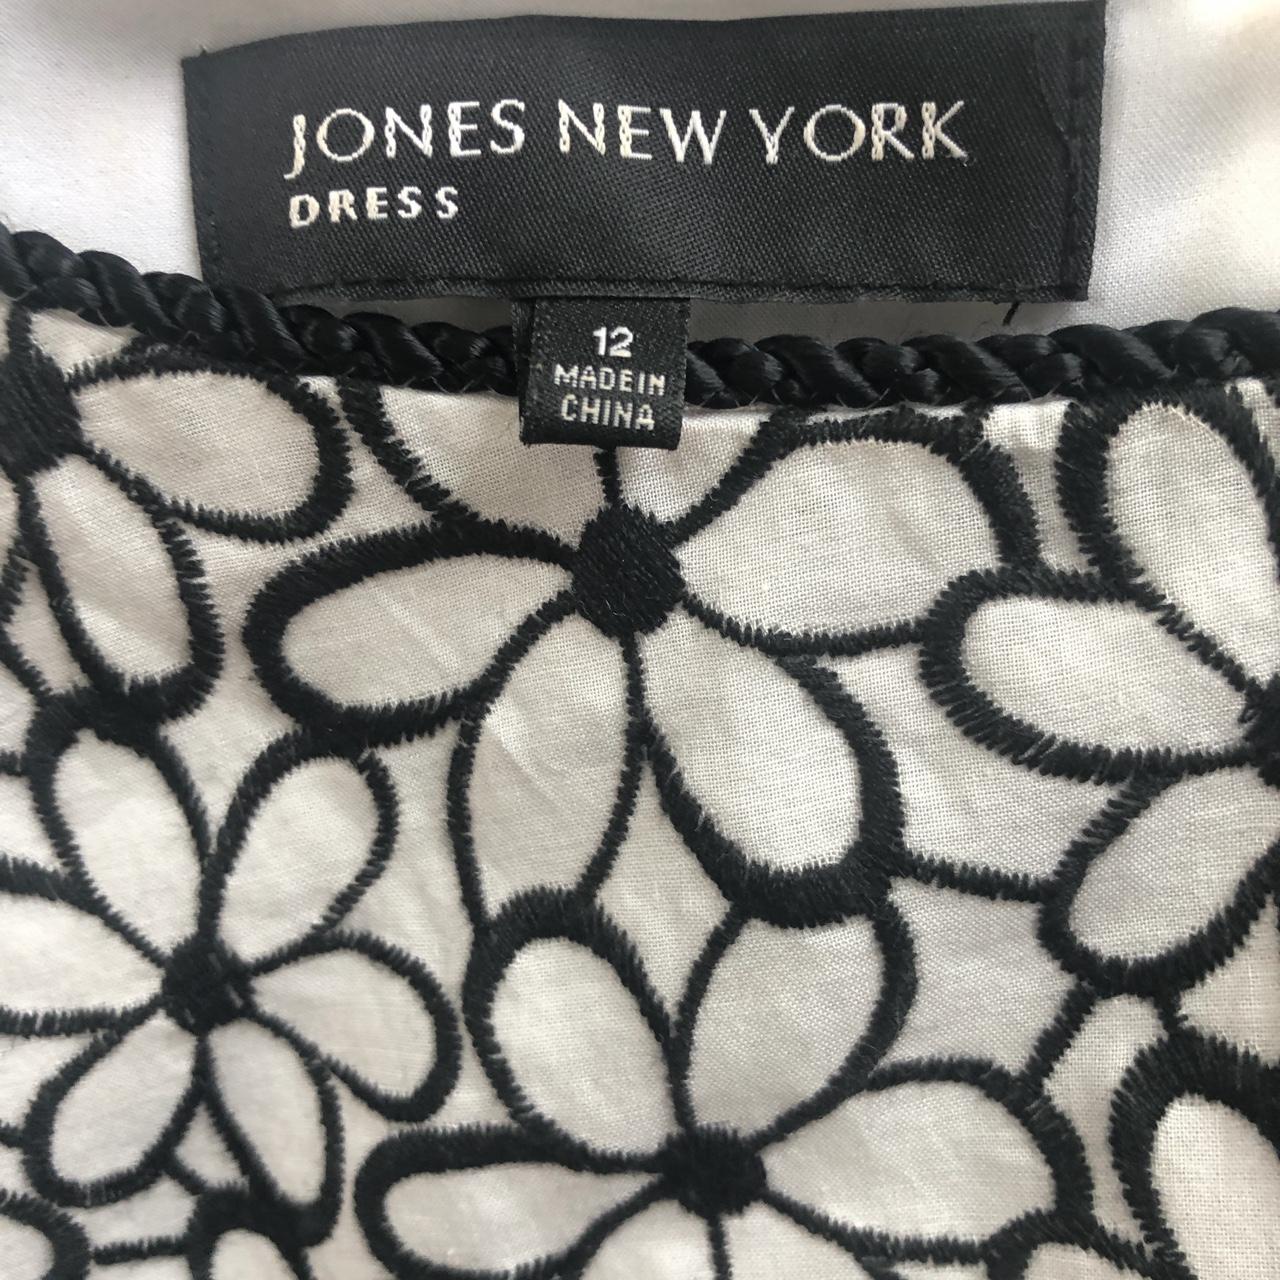 Jones New York Women's Black and White Dress | Depop